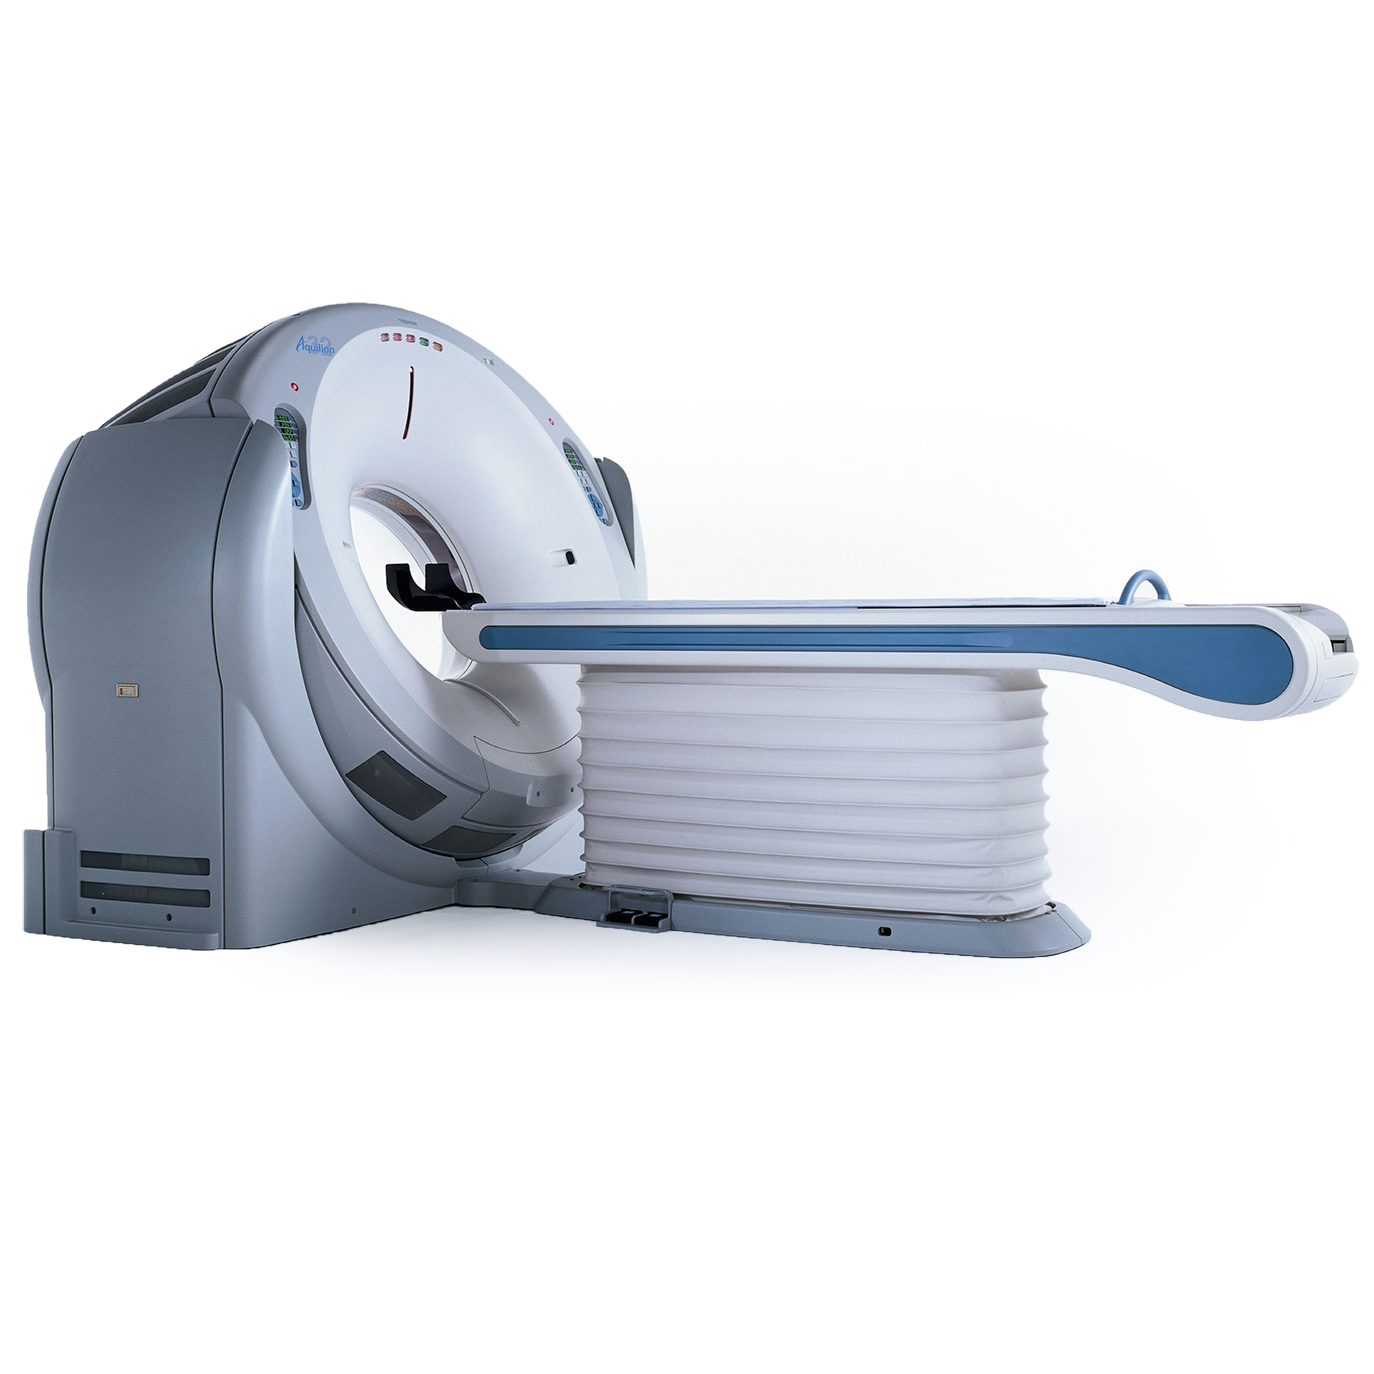 Toshiba Aquilion CT Scanner